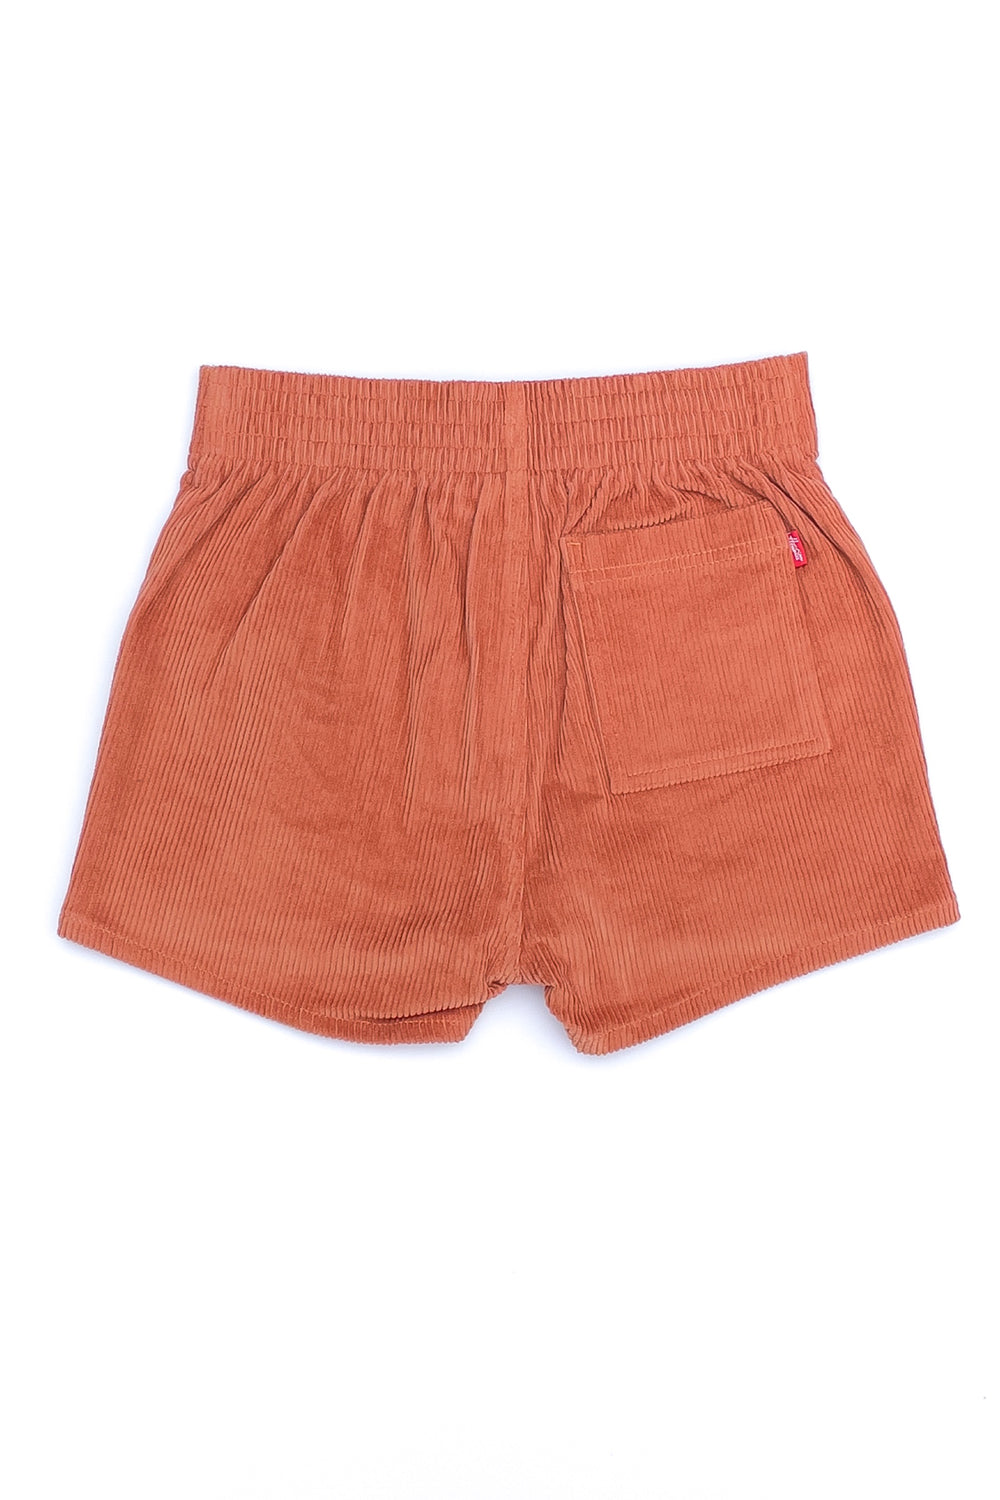 Hammies Shorts - Rust